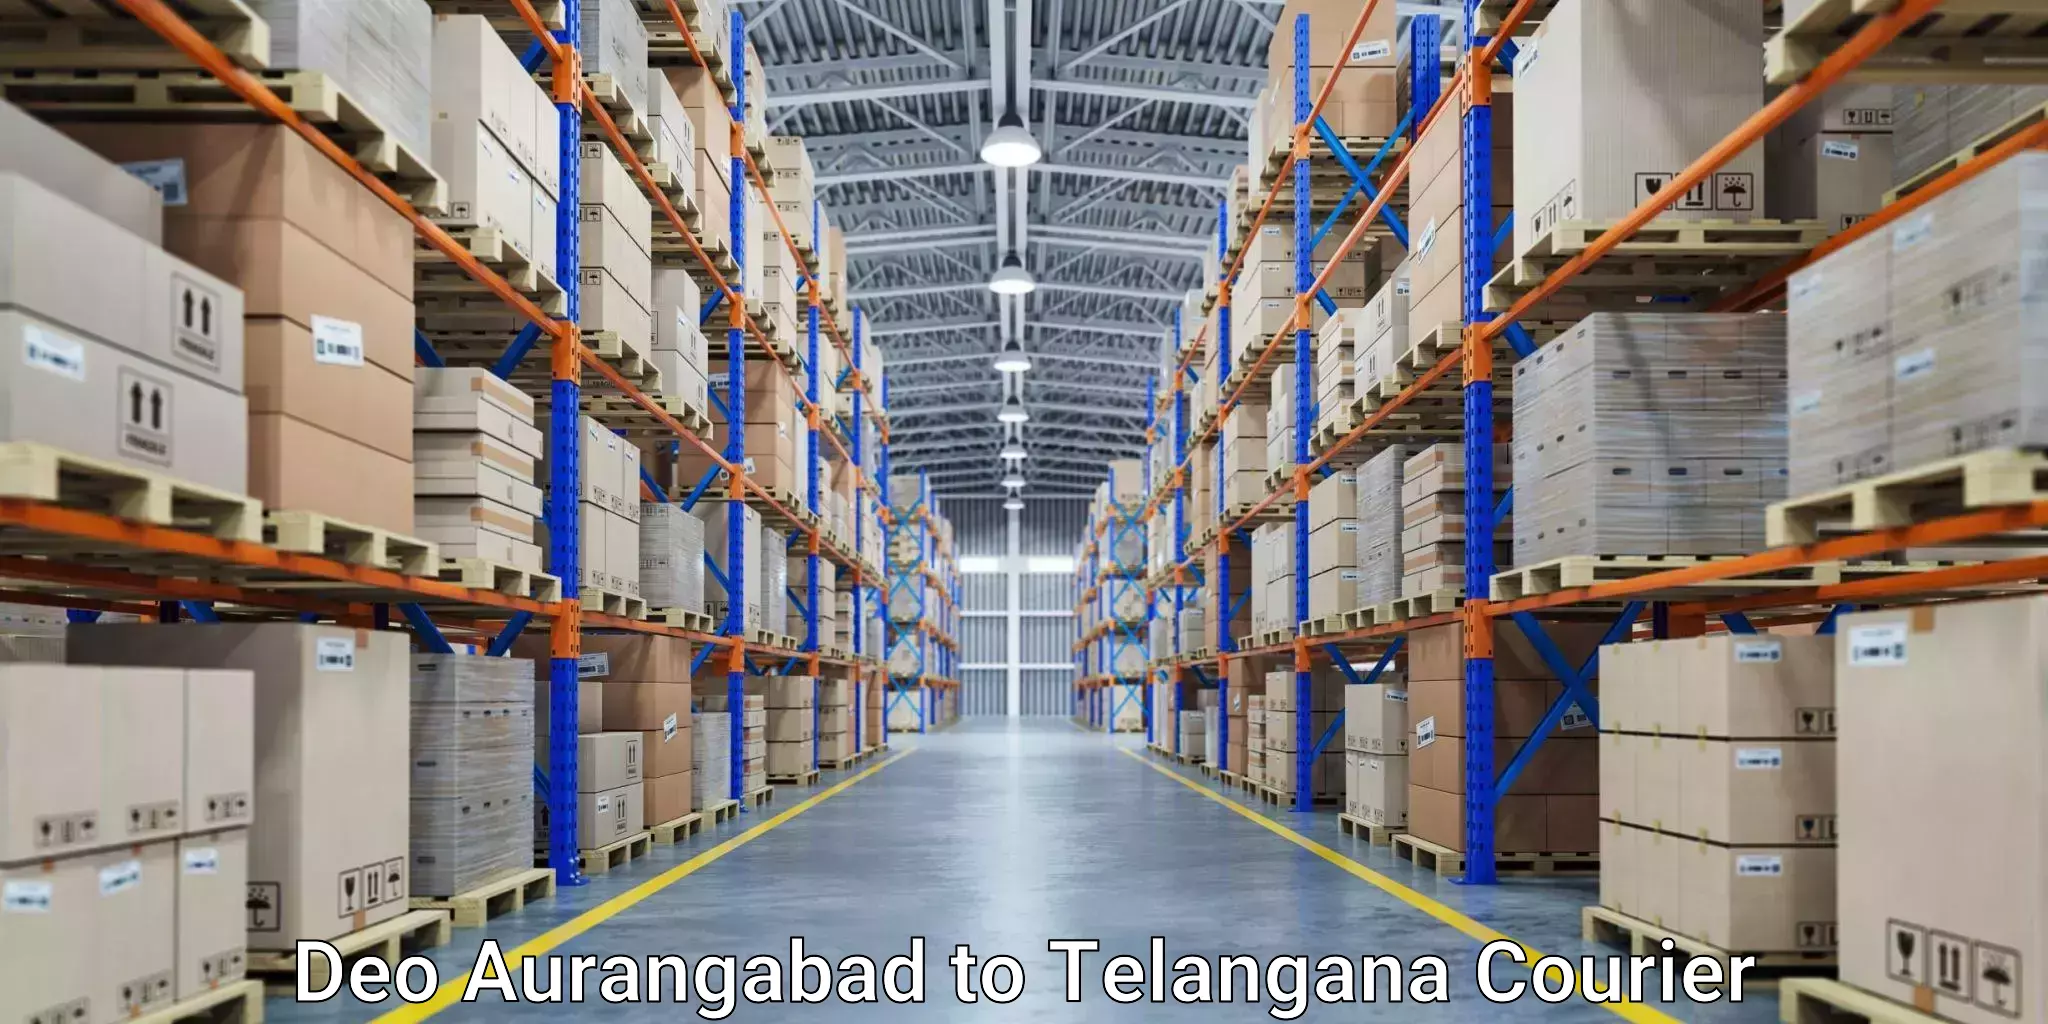 Parcel delivery automation Deo Aurangabad to Kaghaznagar